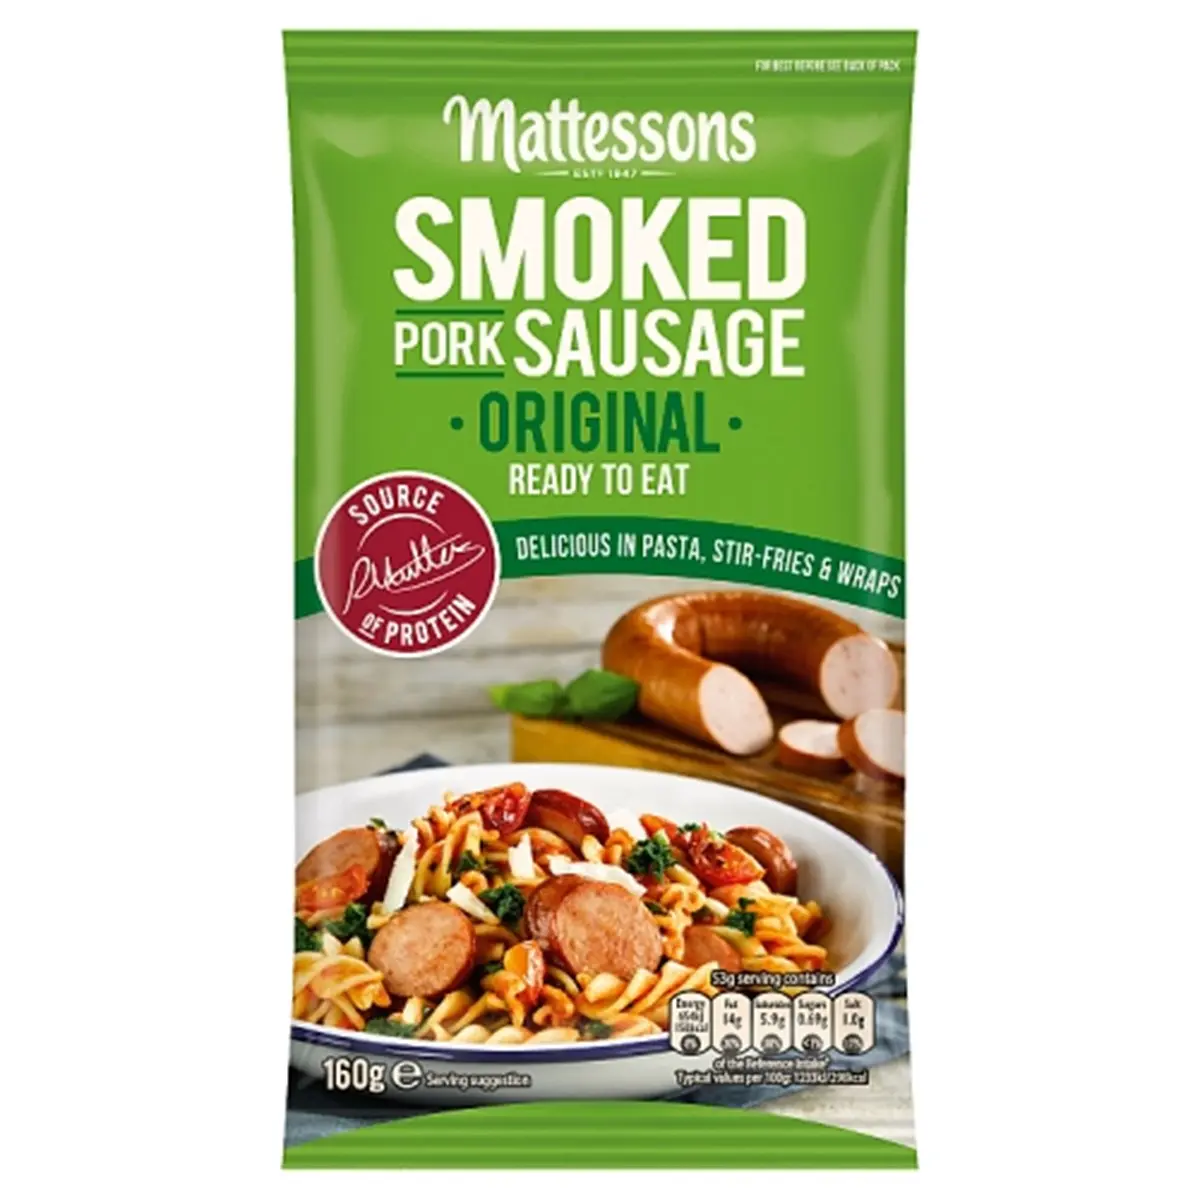 mattessons smoked pork sausage original - Is Mattessons smoked sausage already cooked